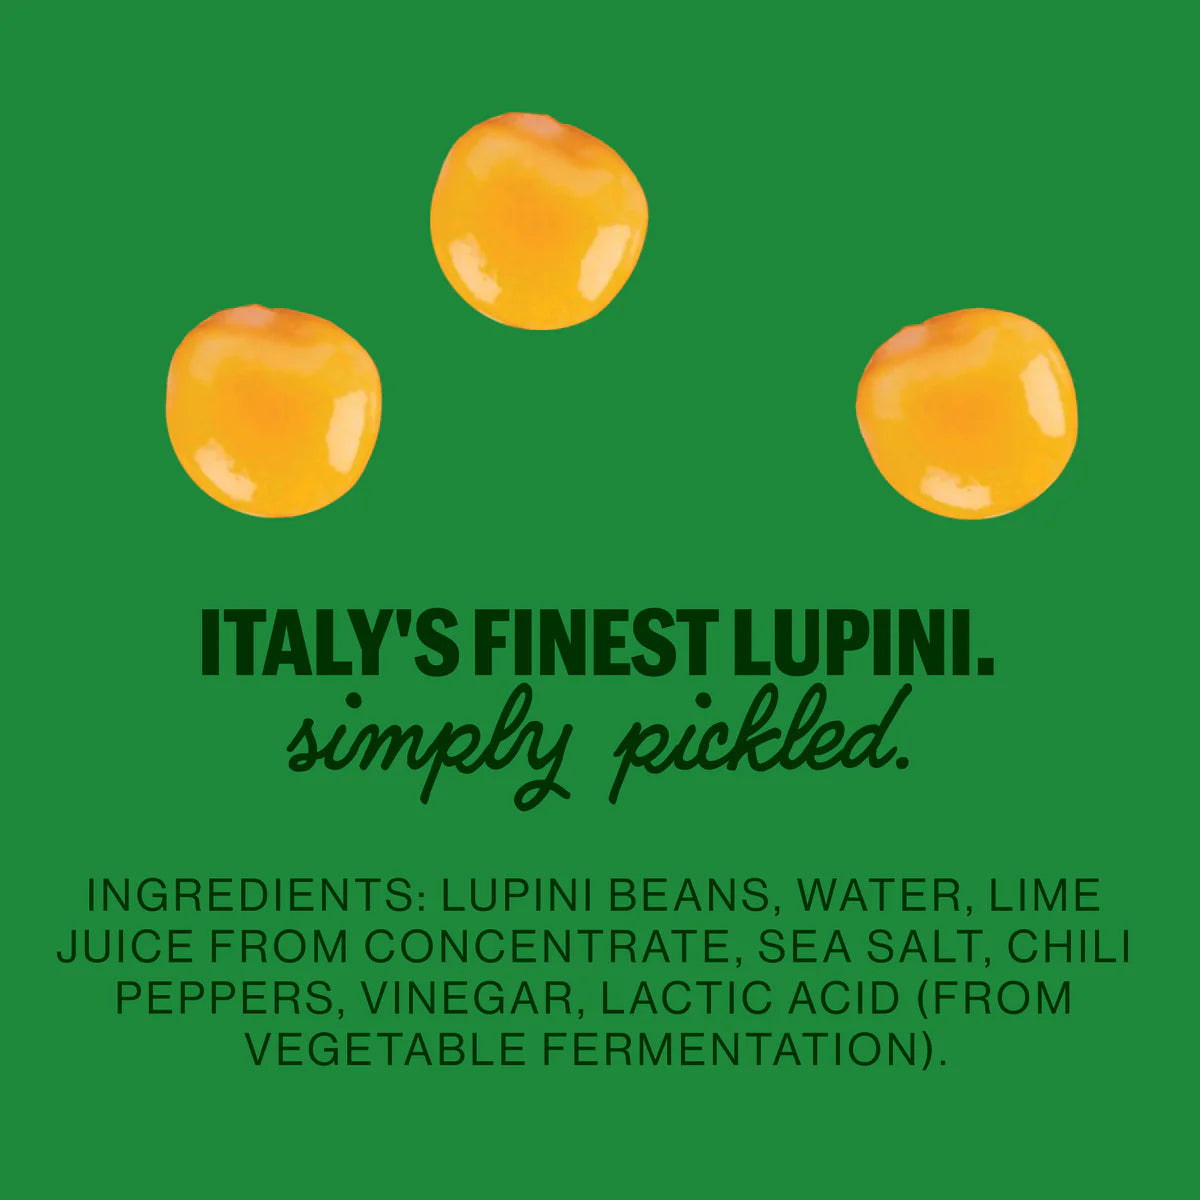 Brami - Chili & Lime Italian Snacking Lupini Beans (5.3 oz)